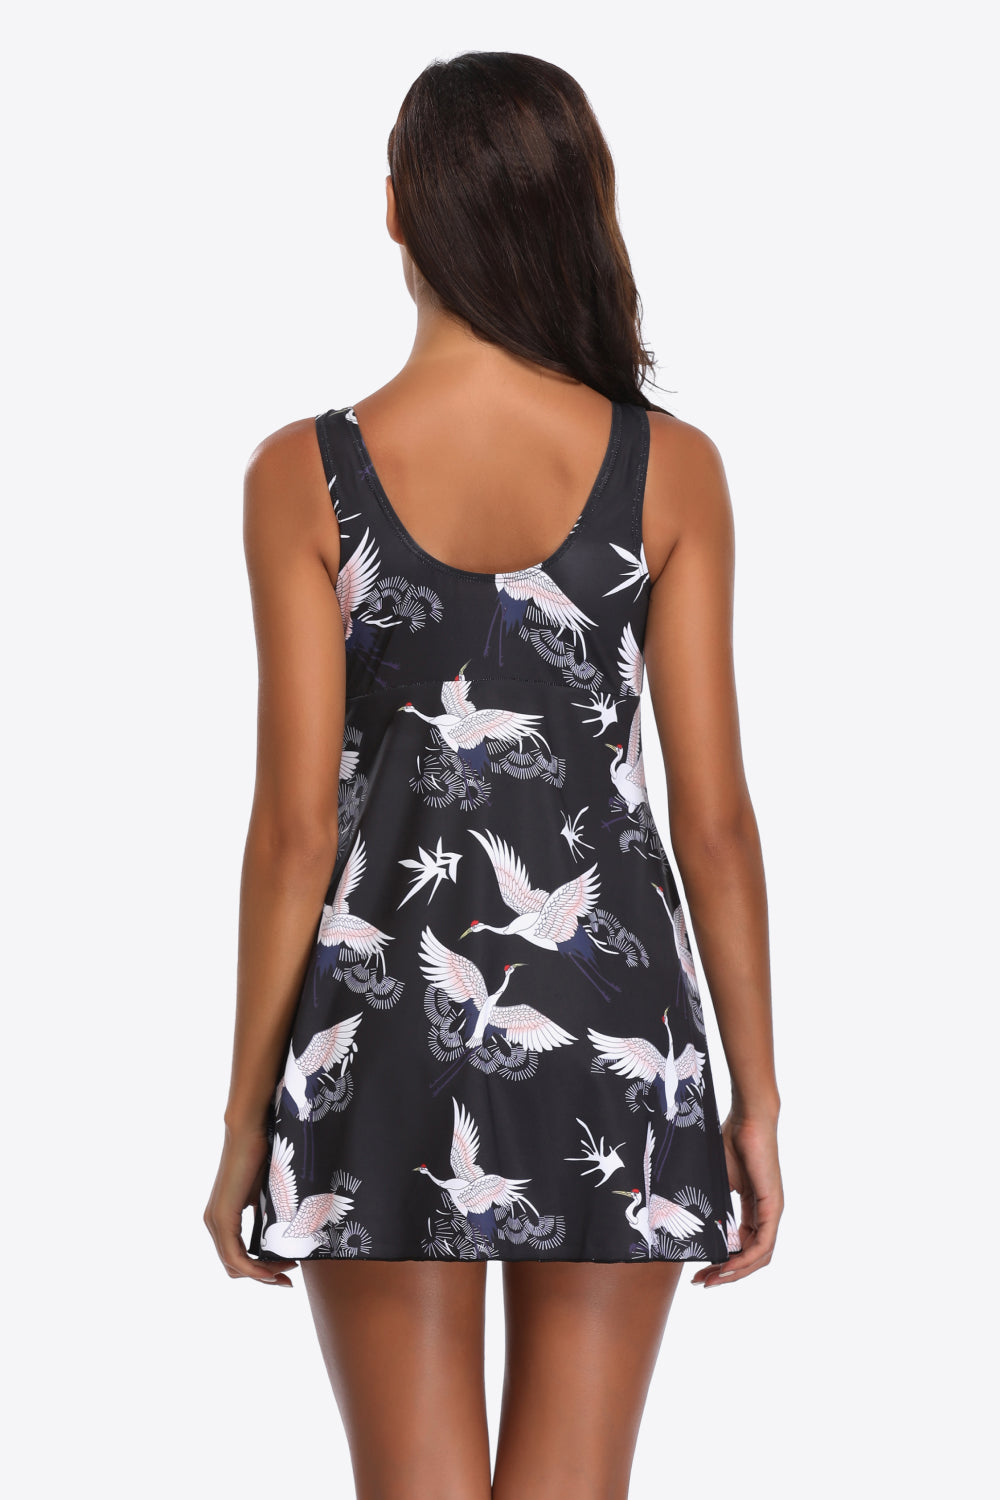 Full Size Animal Print Swim Dress - The Fashion Unicorn